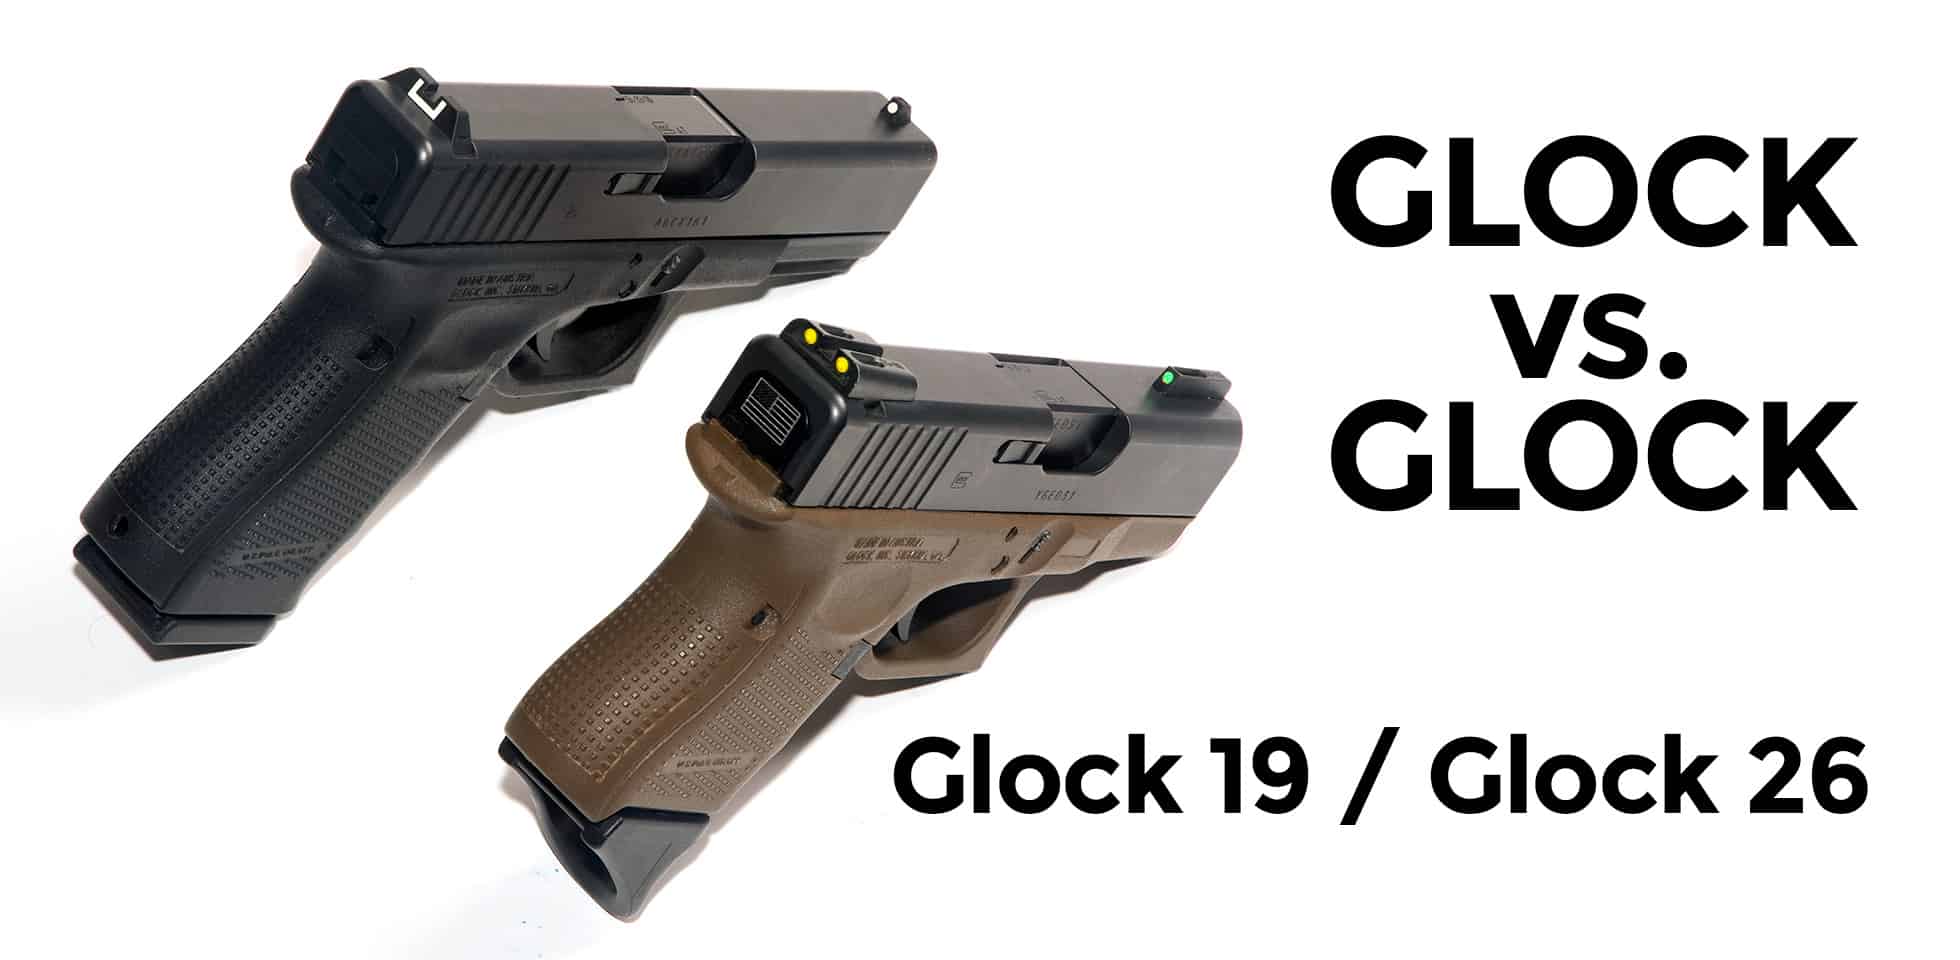 Glock 26 VS Glock 19: A Woman's Review